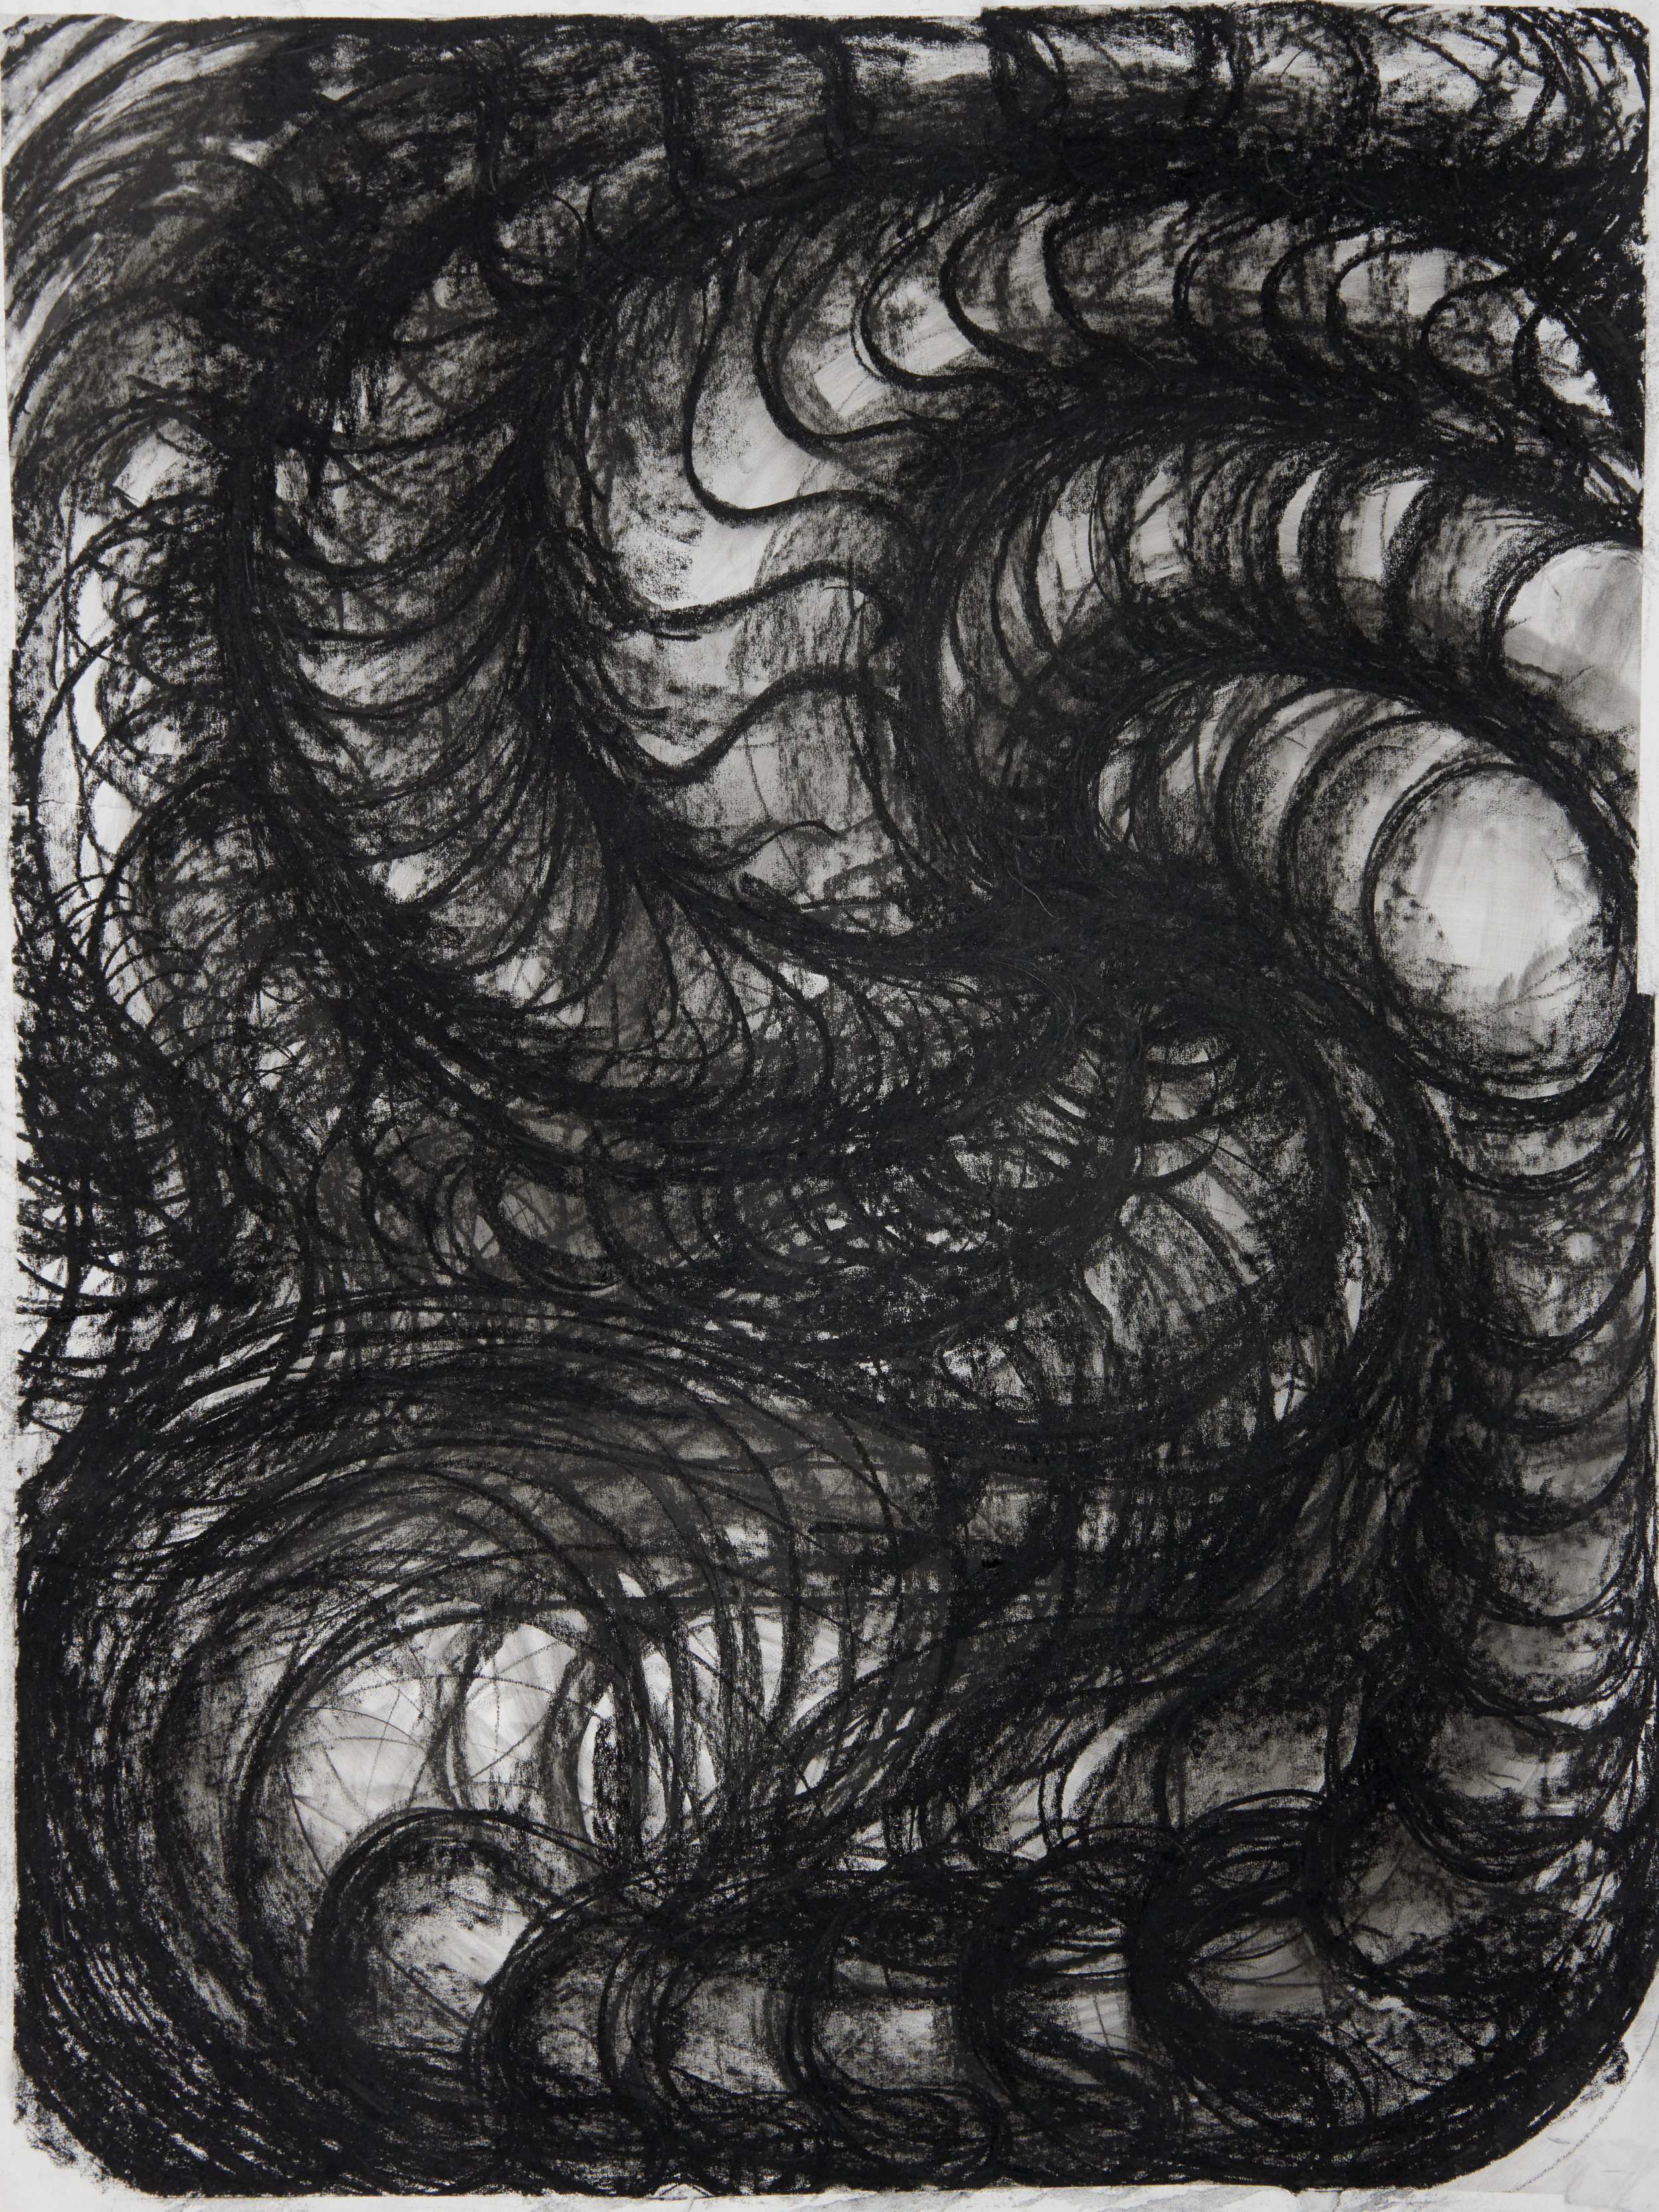  Vortex Study, 2018 135x 100 cm charcoal on paper 